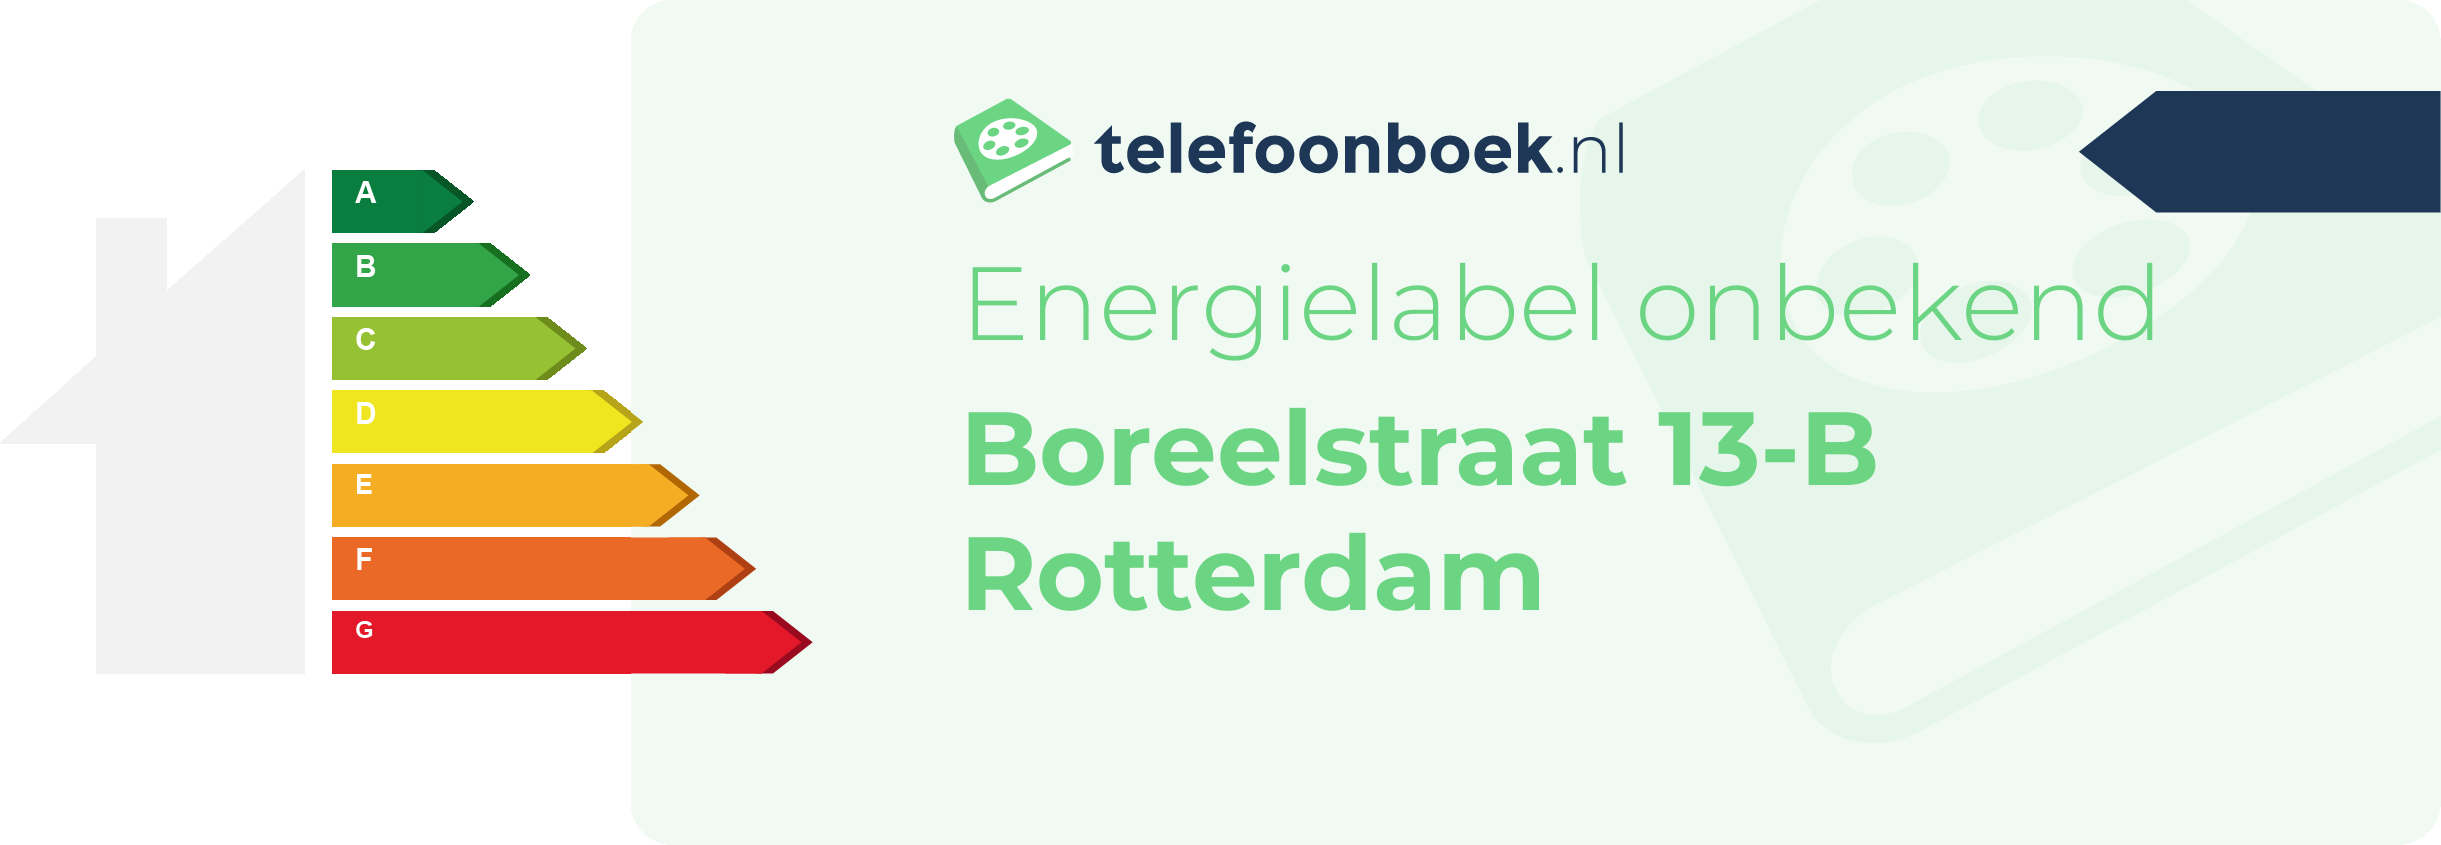 Energielabel Boreelstraat 13-B Rotterdam